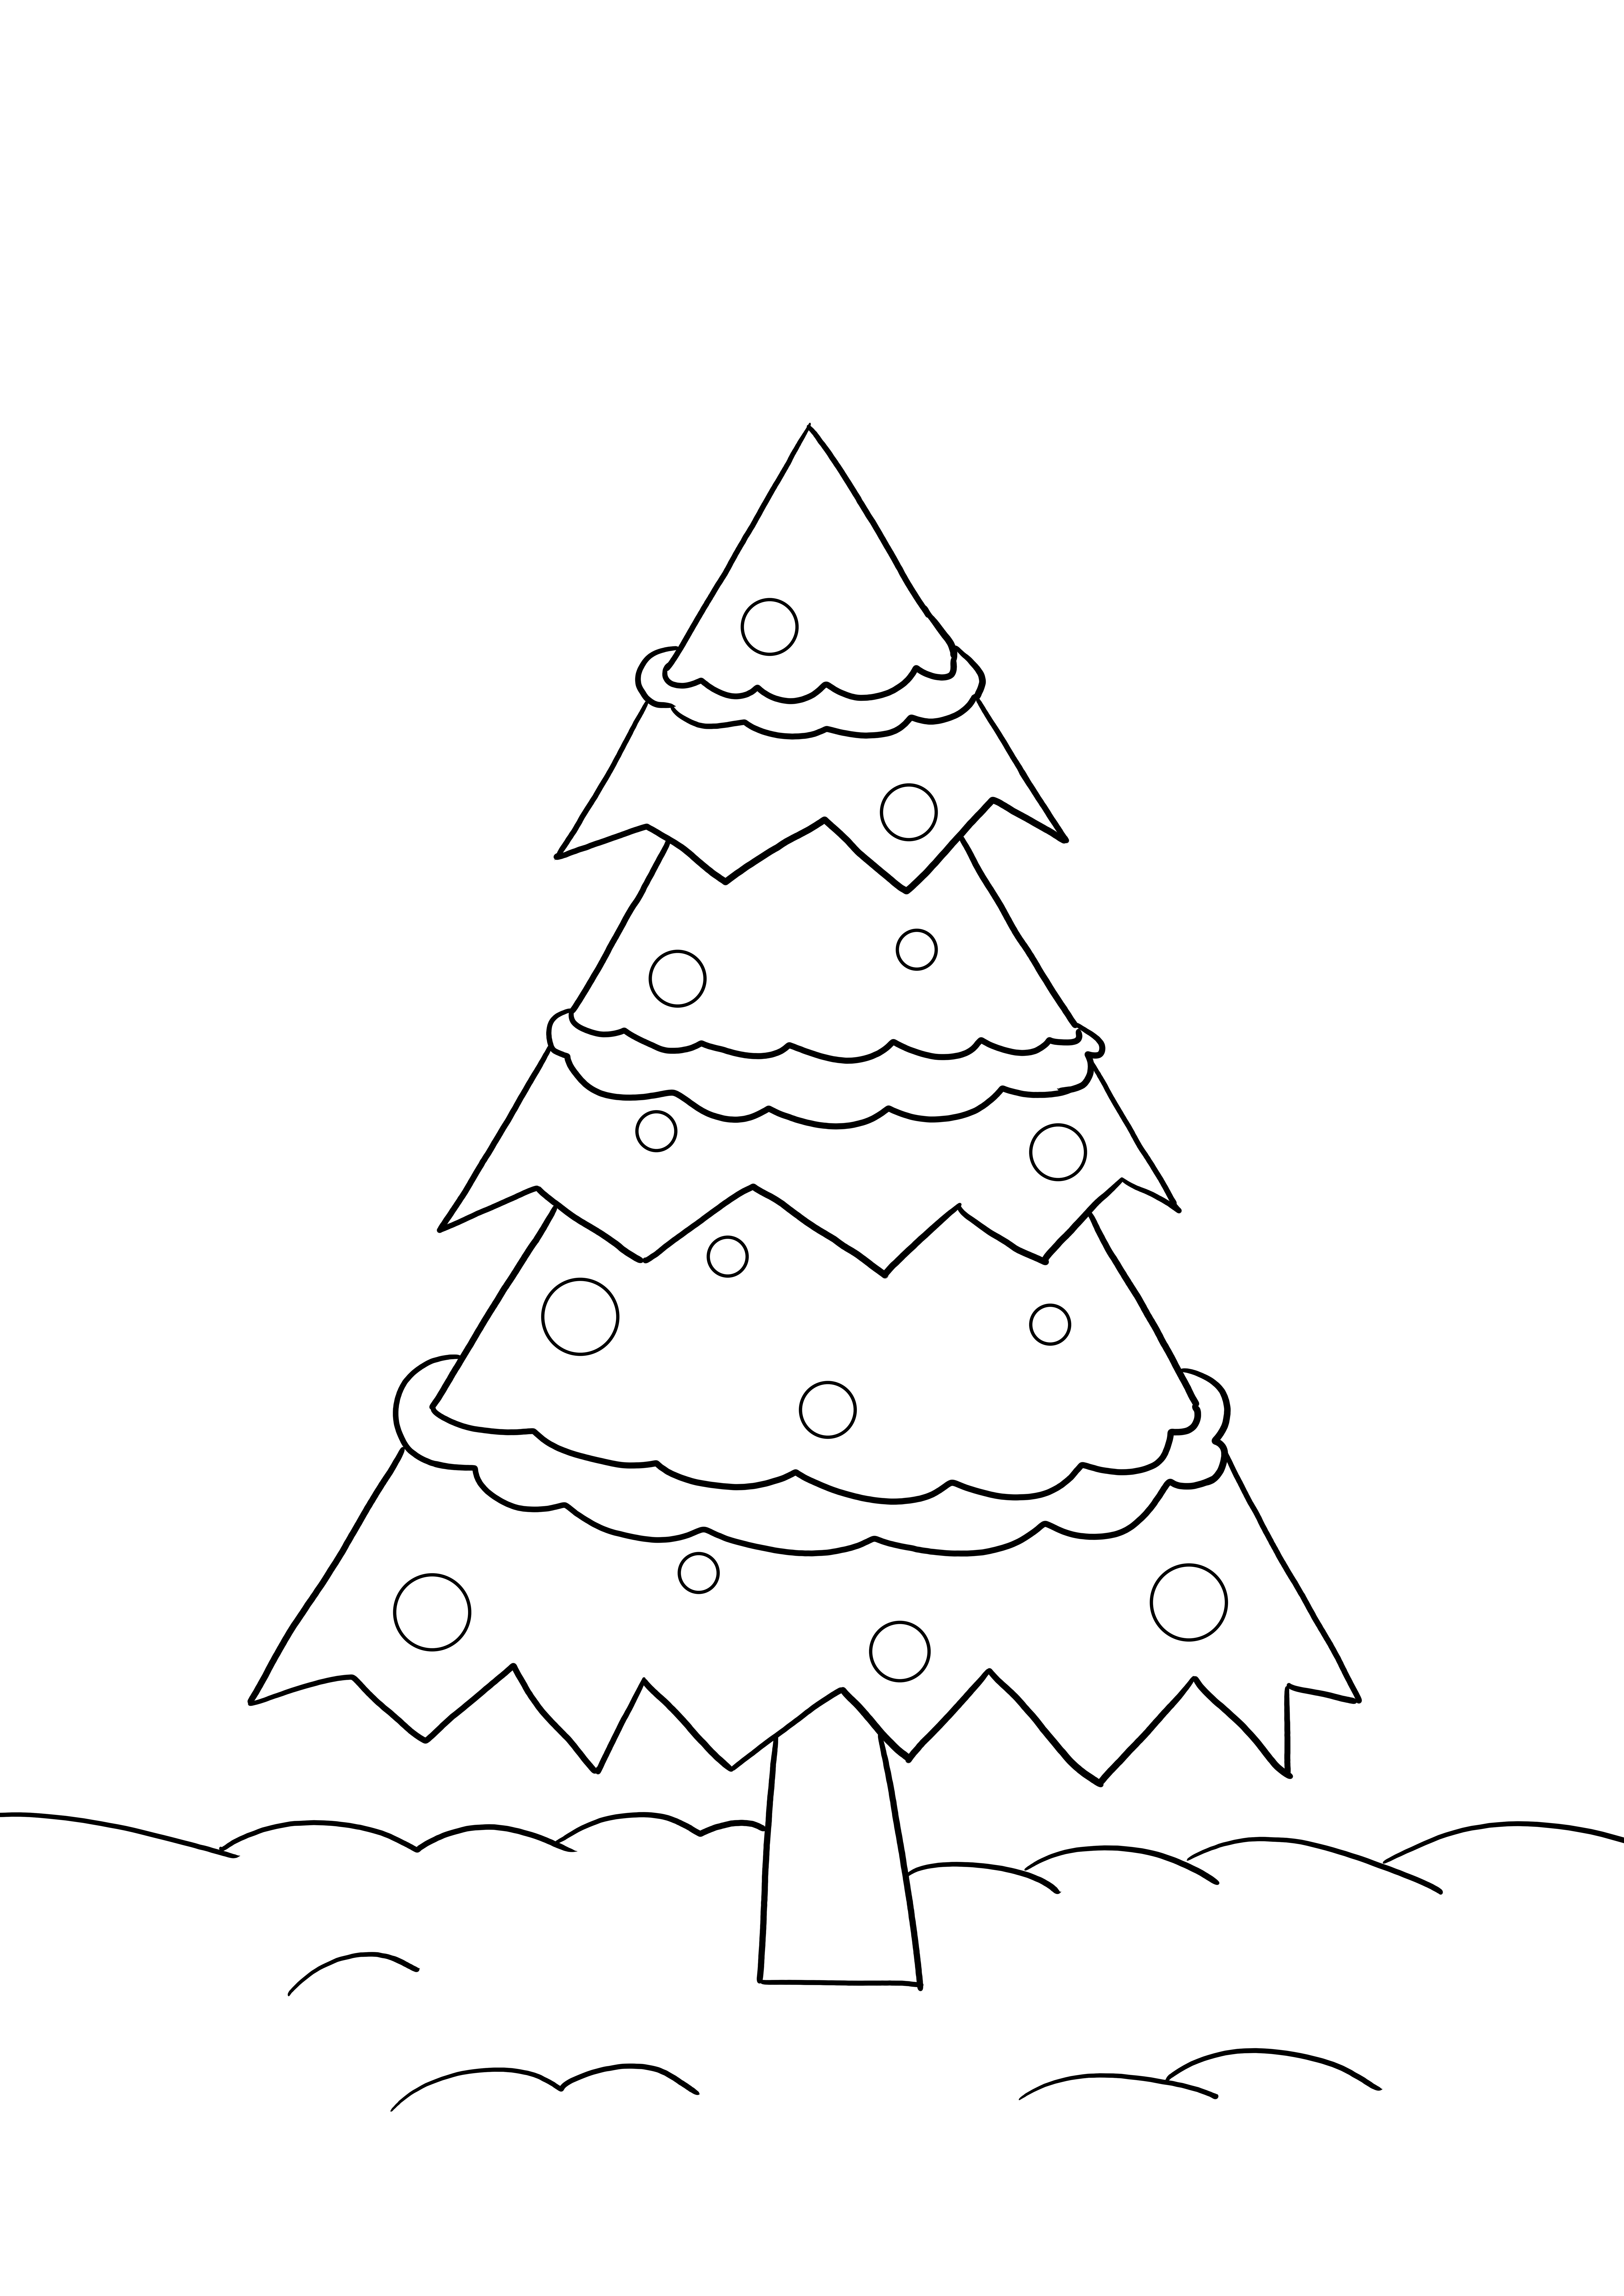 Simple Christmas Tree coloring sheet for free printing or saving